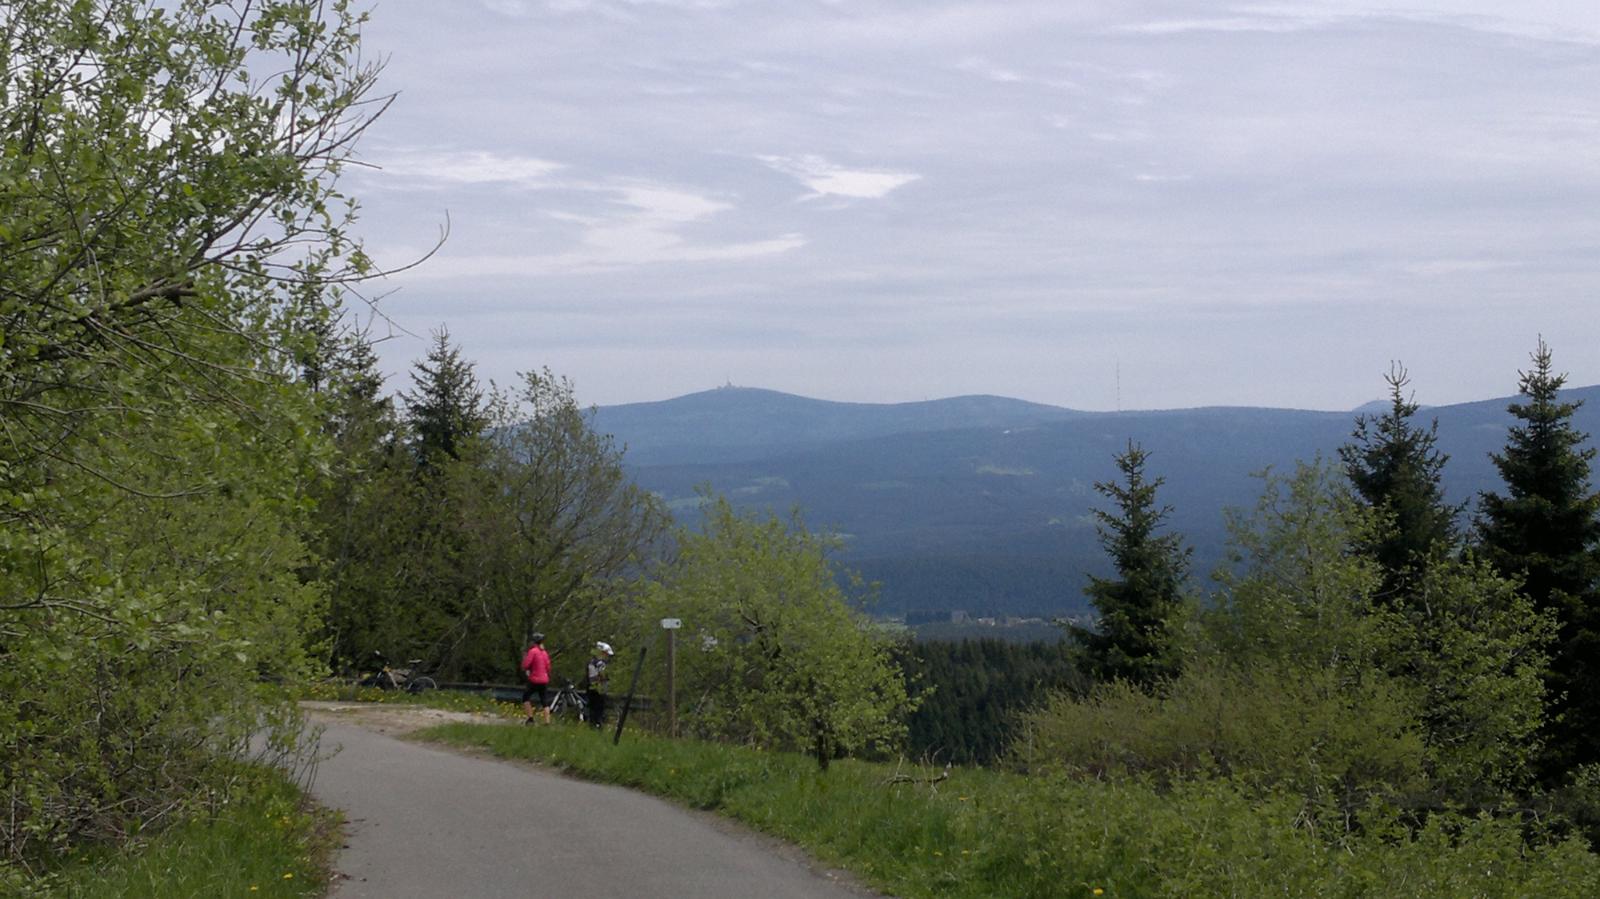 mtb-harz-2012-47.jpg - Start på ca. 42 km MTB. Harzens højeste bjerg Brocken i baggrunden. Brocken er ca. 1.100 meter høj